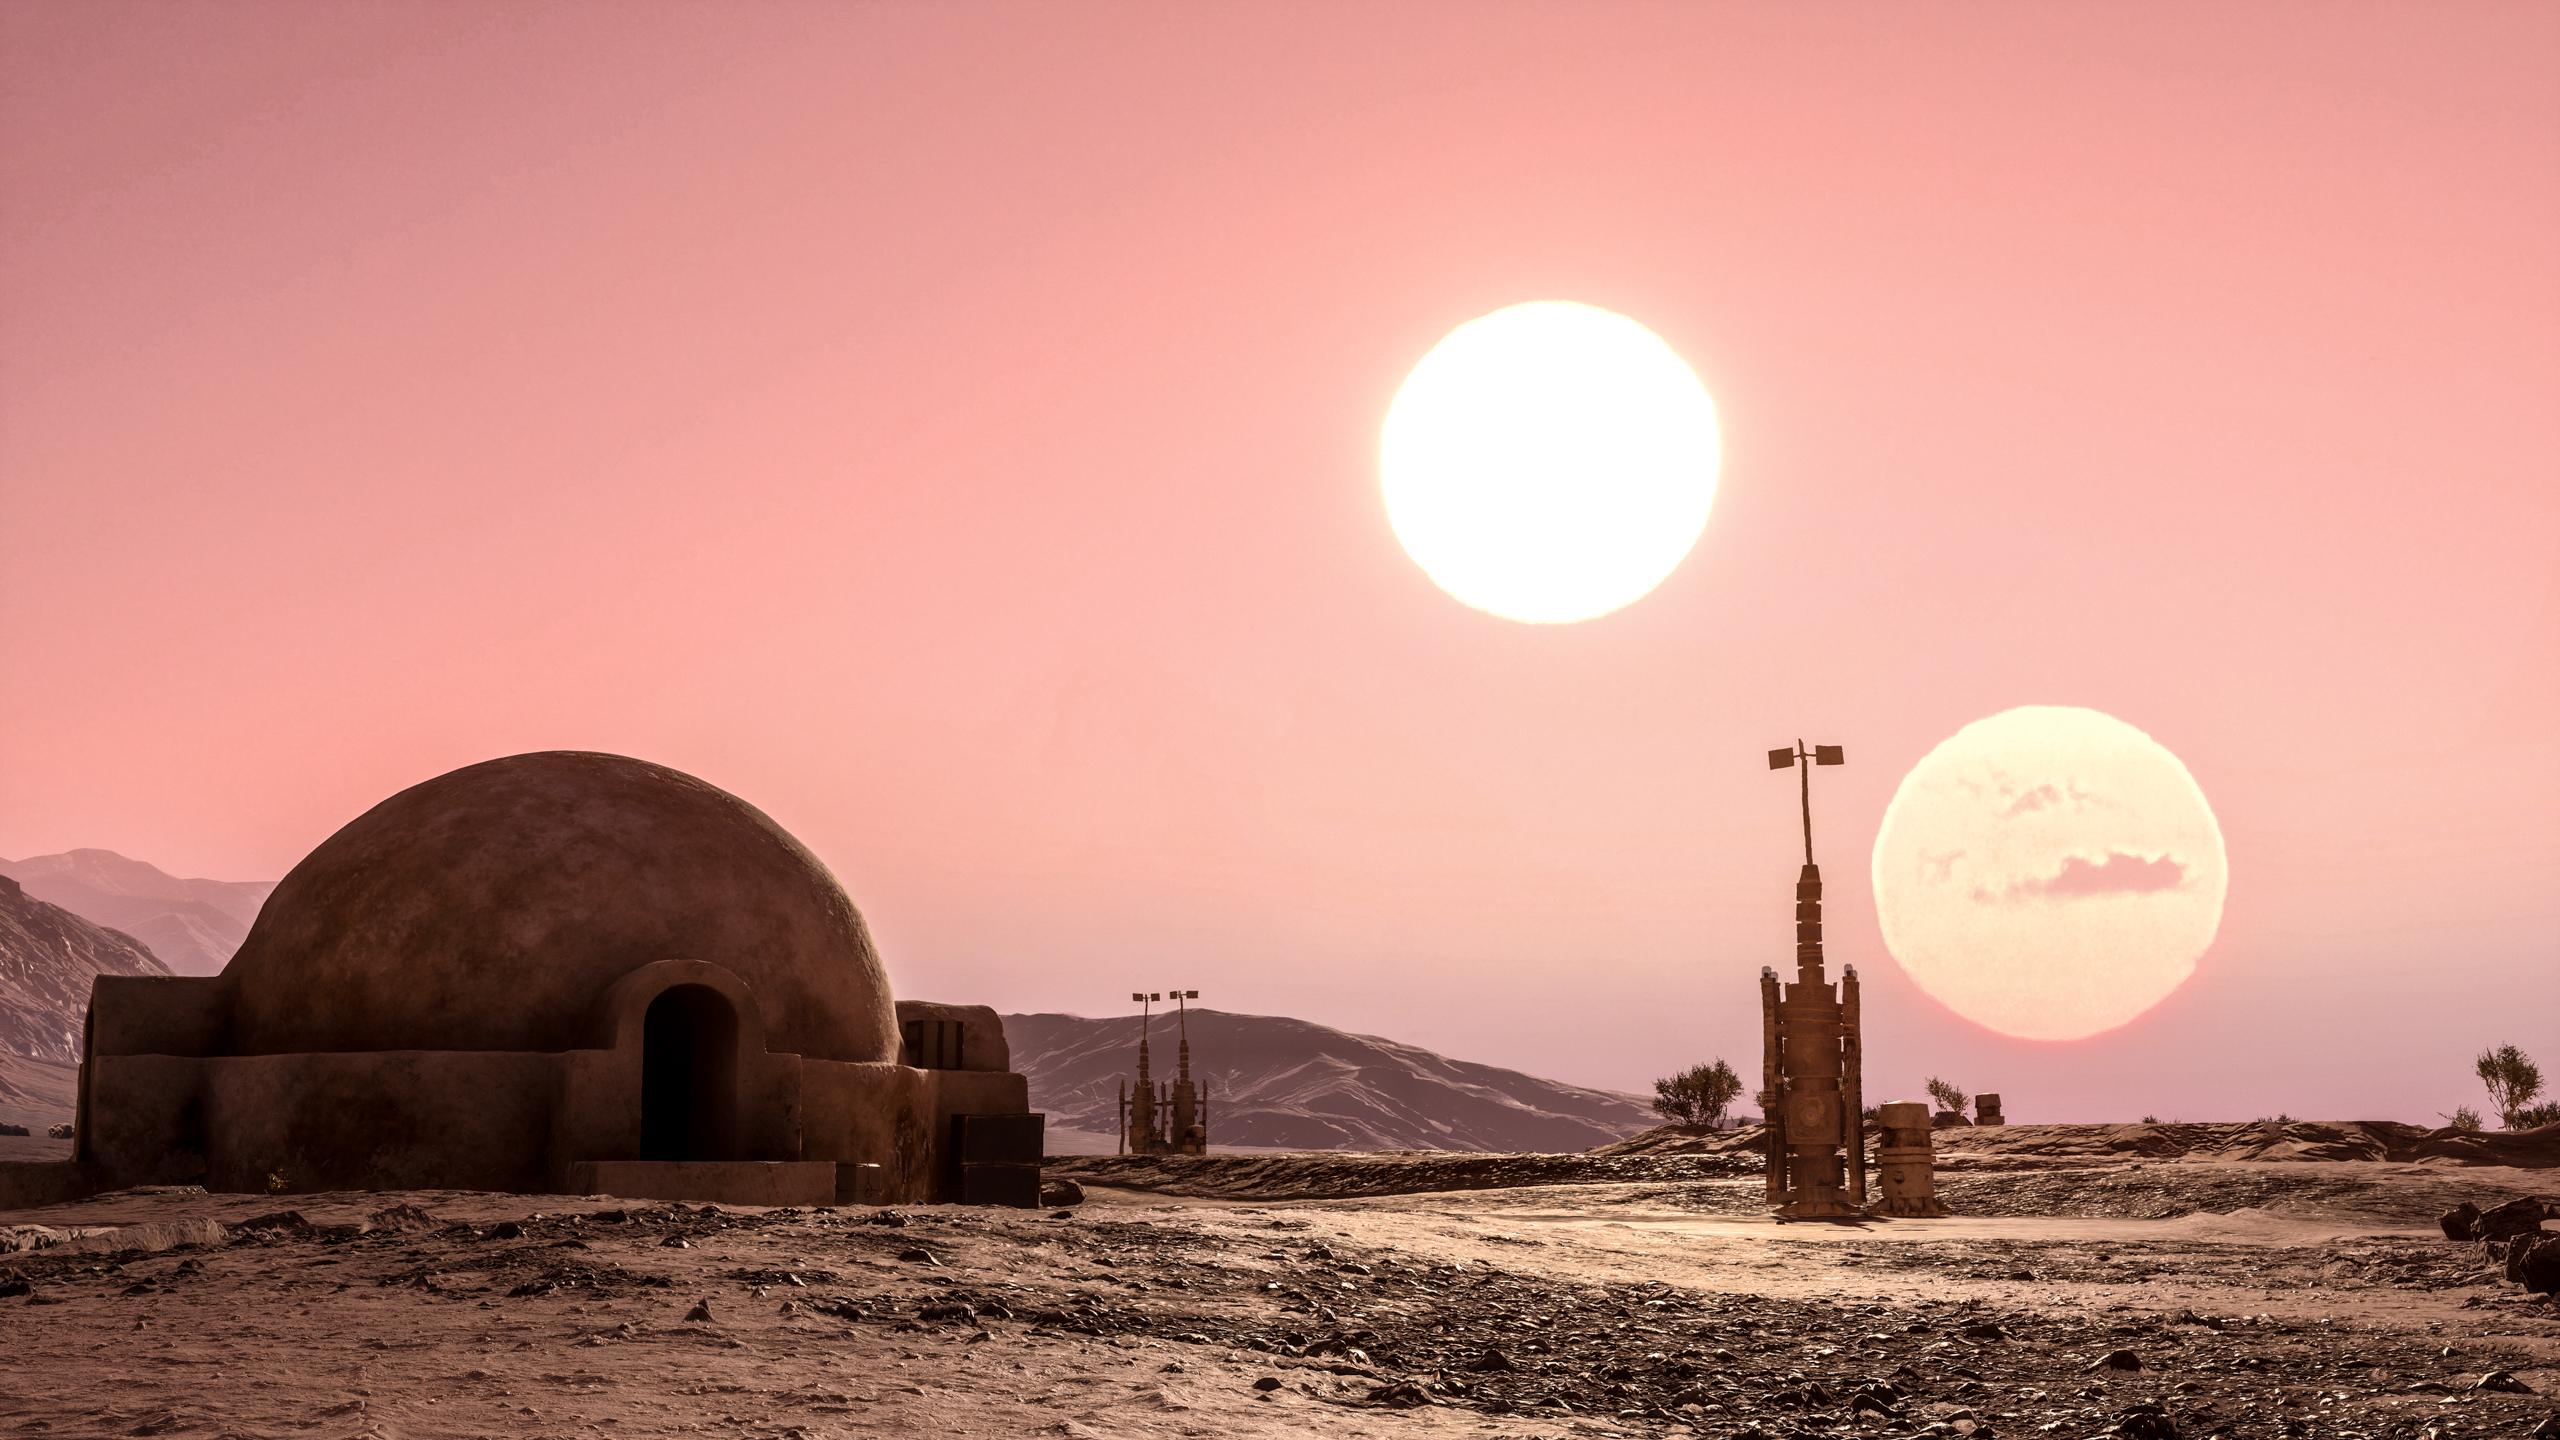 Star Wars Tatooine Wallpapers Top Free Star Wars Tatooine Backgrounds Wallpaperaccess 6275